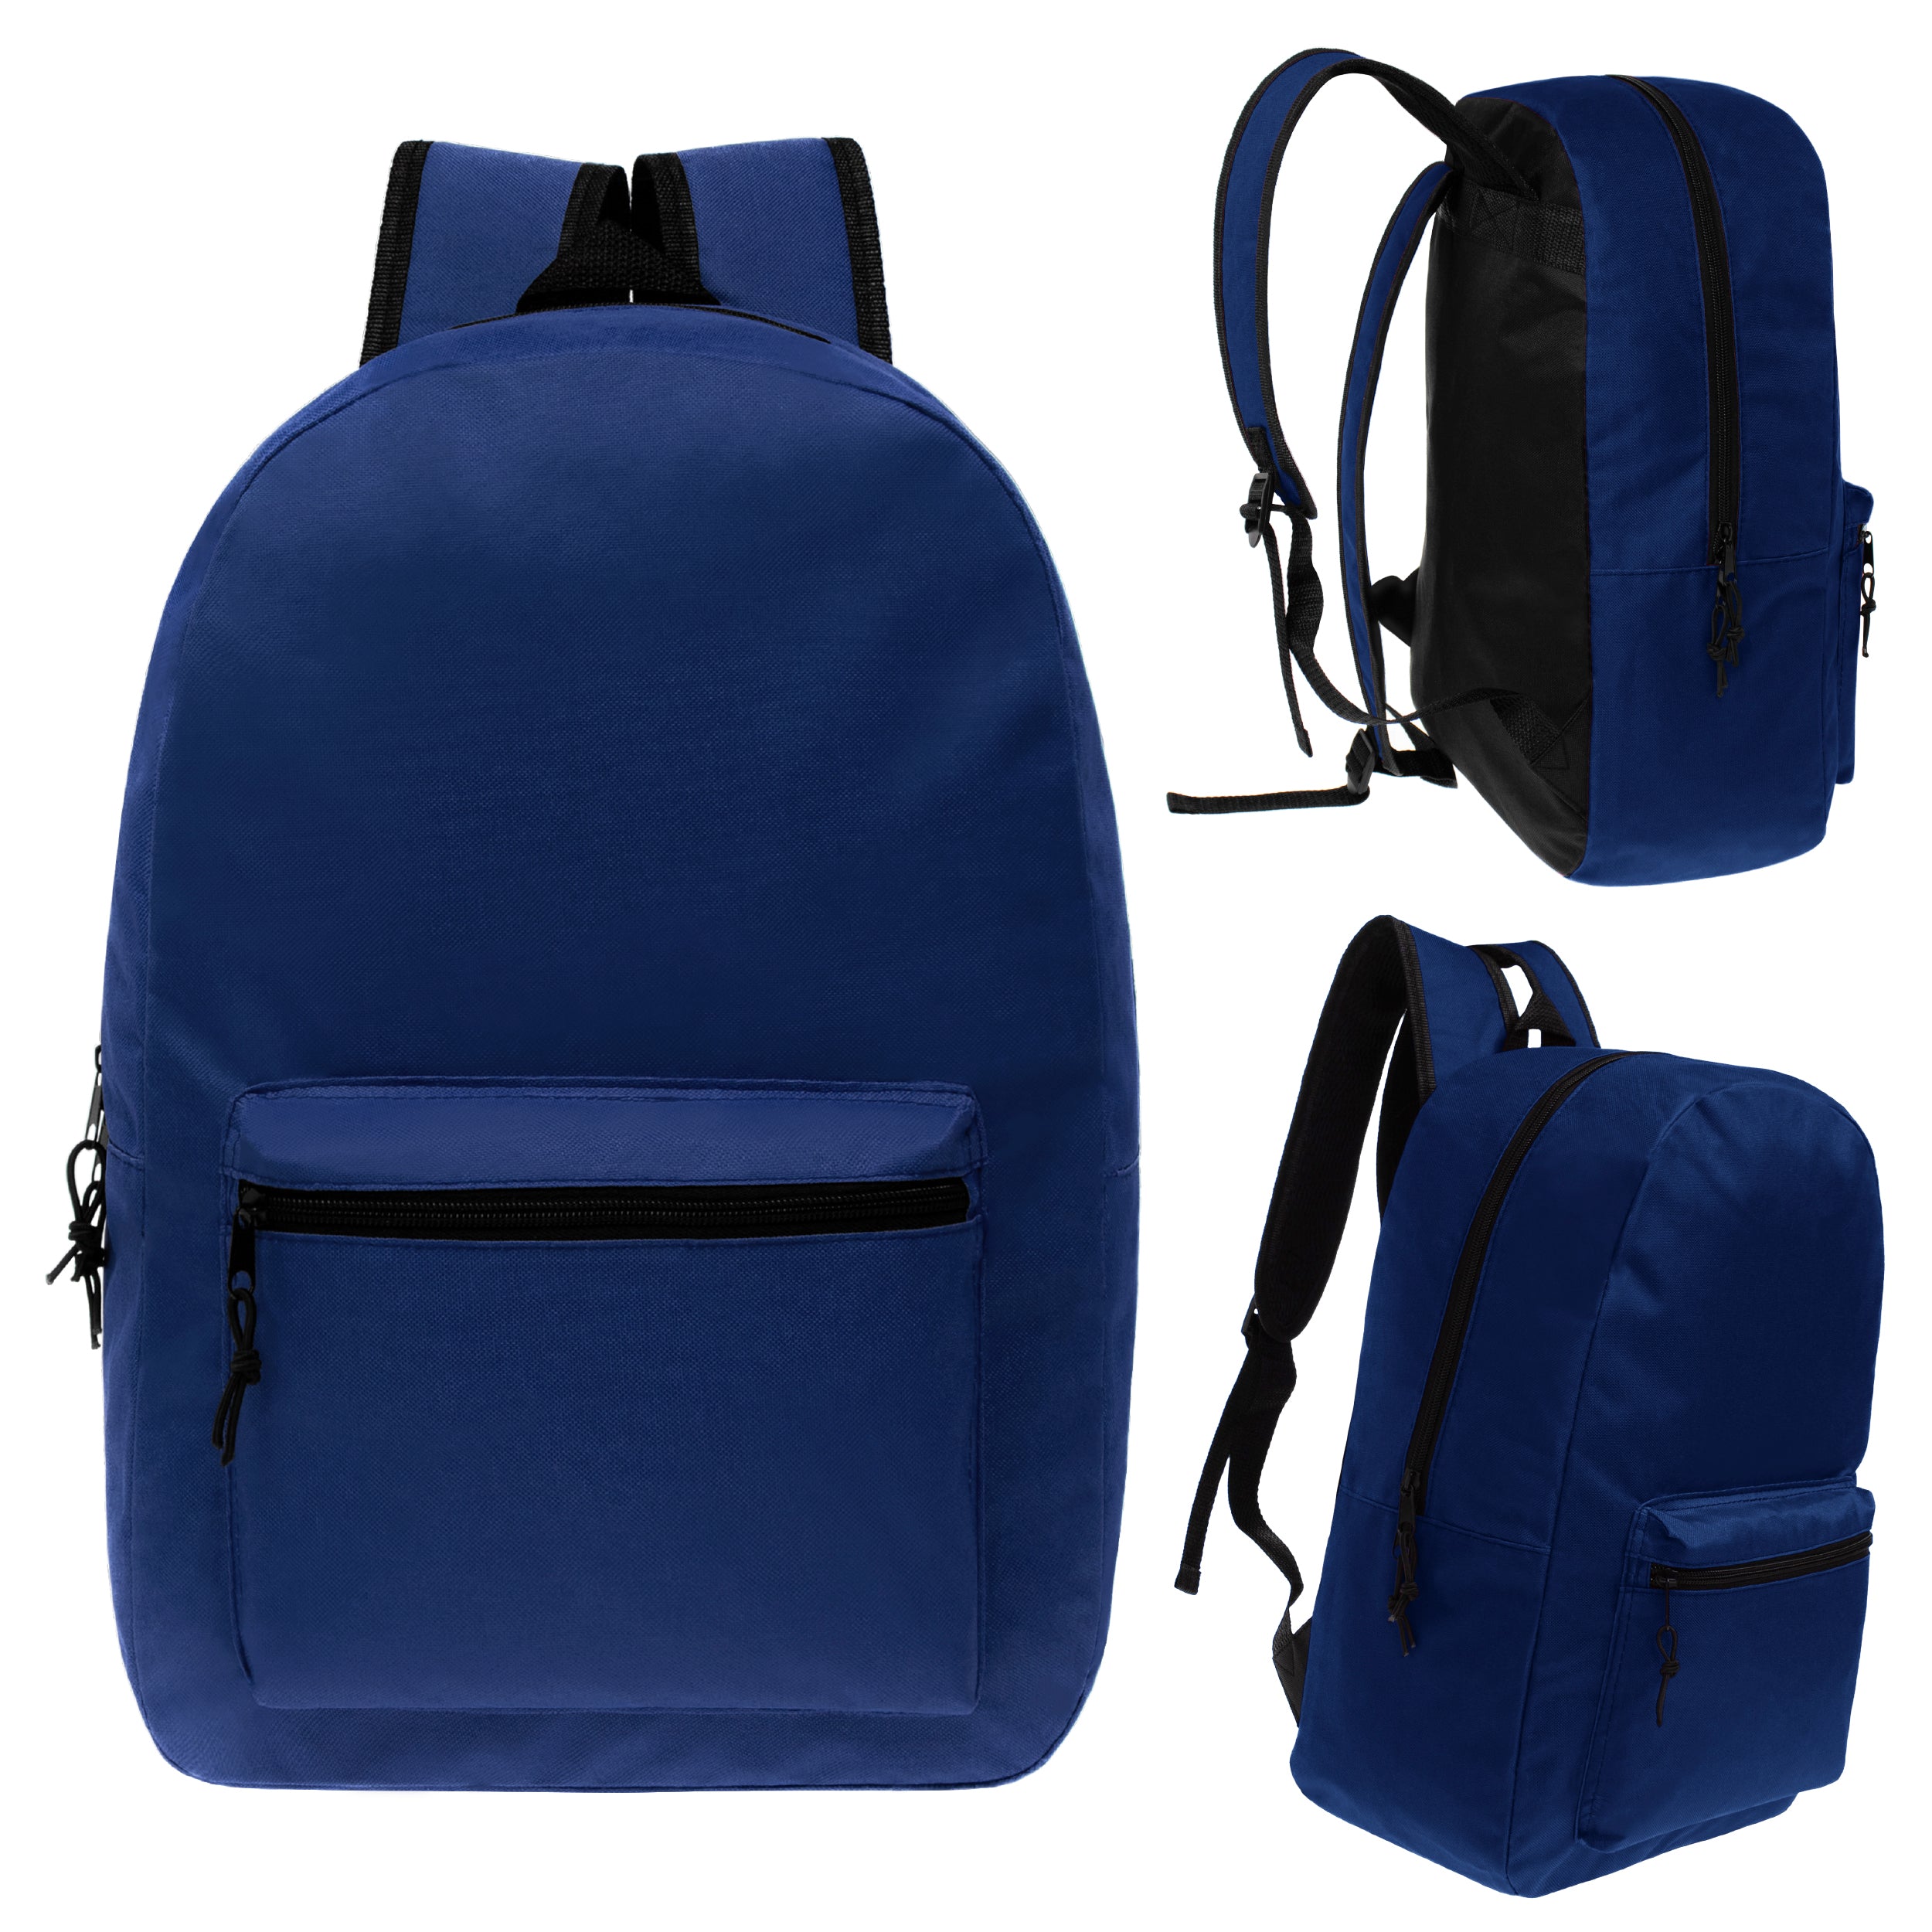 Navy Blue Wholesale 17 Inch Backpack in Bulk - School Boys & Girls